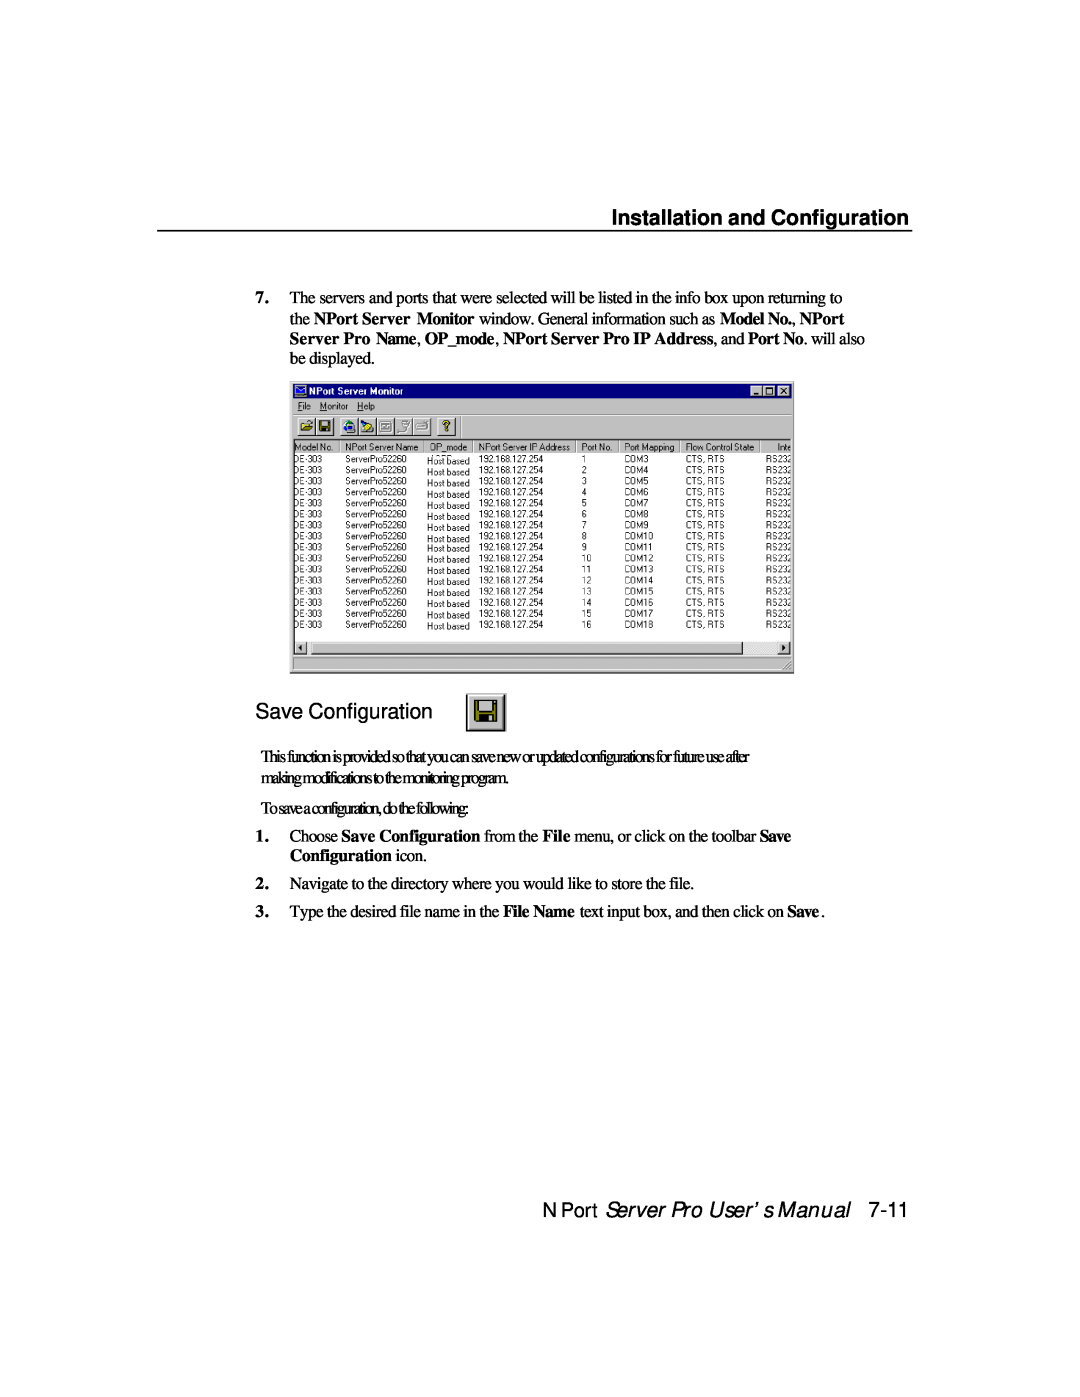 Moxa Technologies DE-308, DE-303 manual Save Configuration, Installation and Configuration, NPort Server Pro User’s Manual 